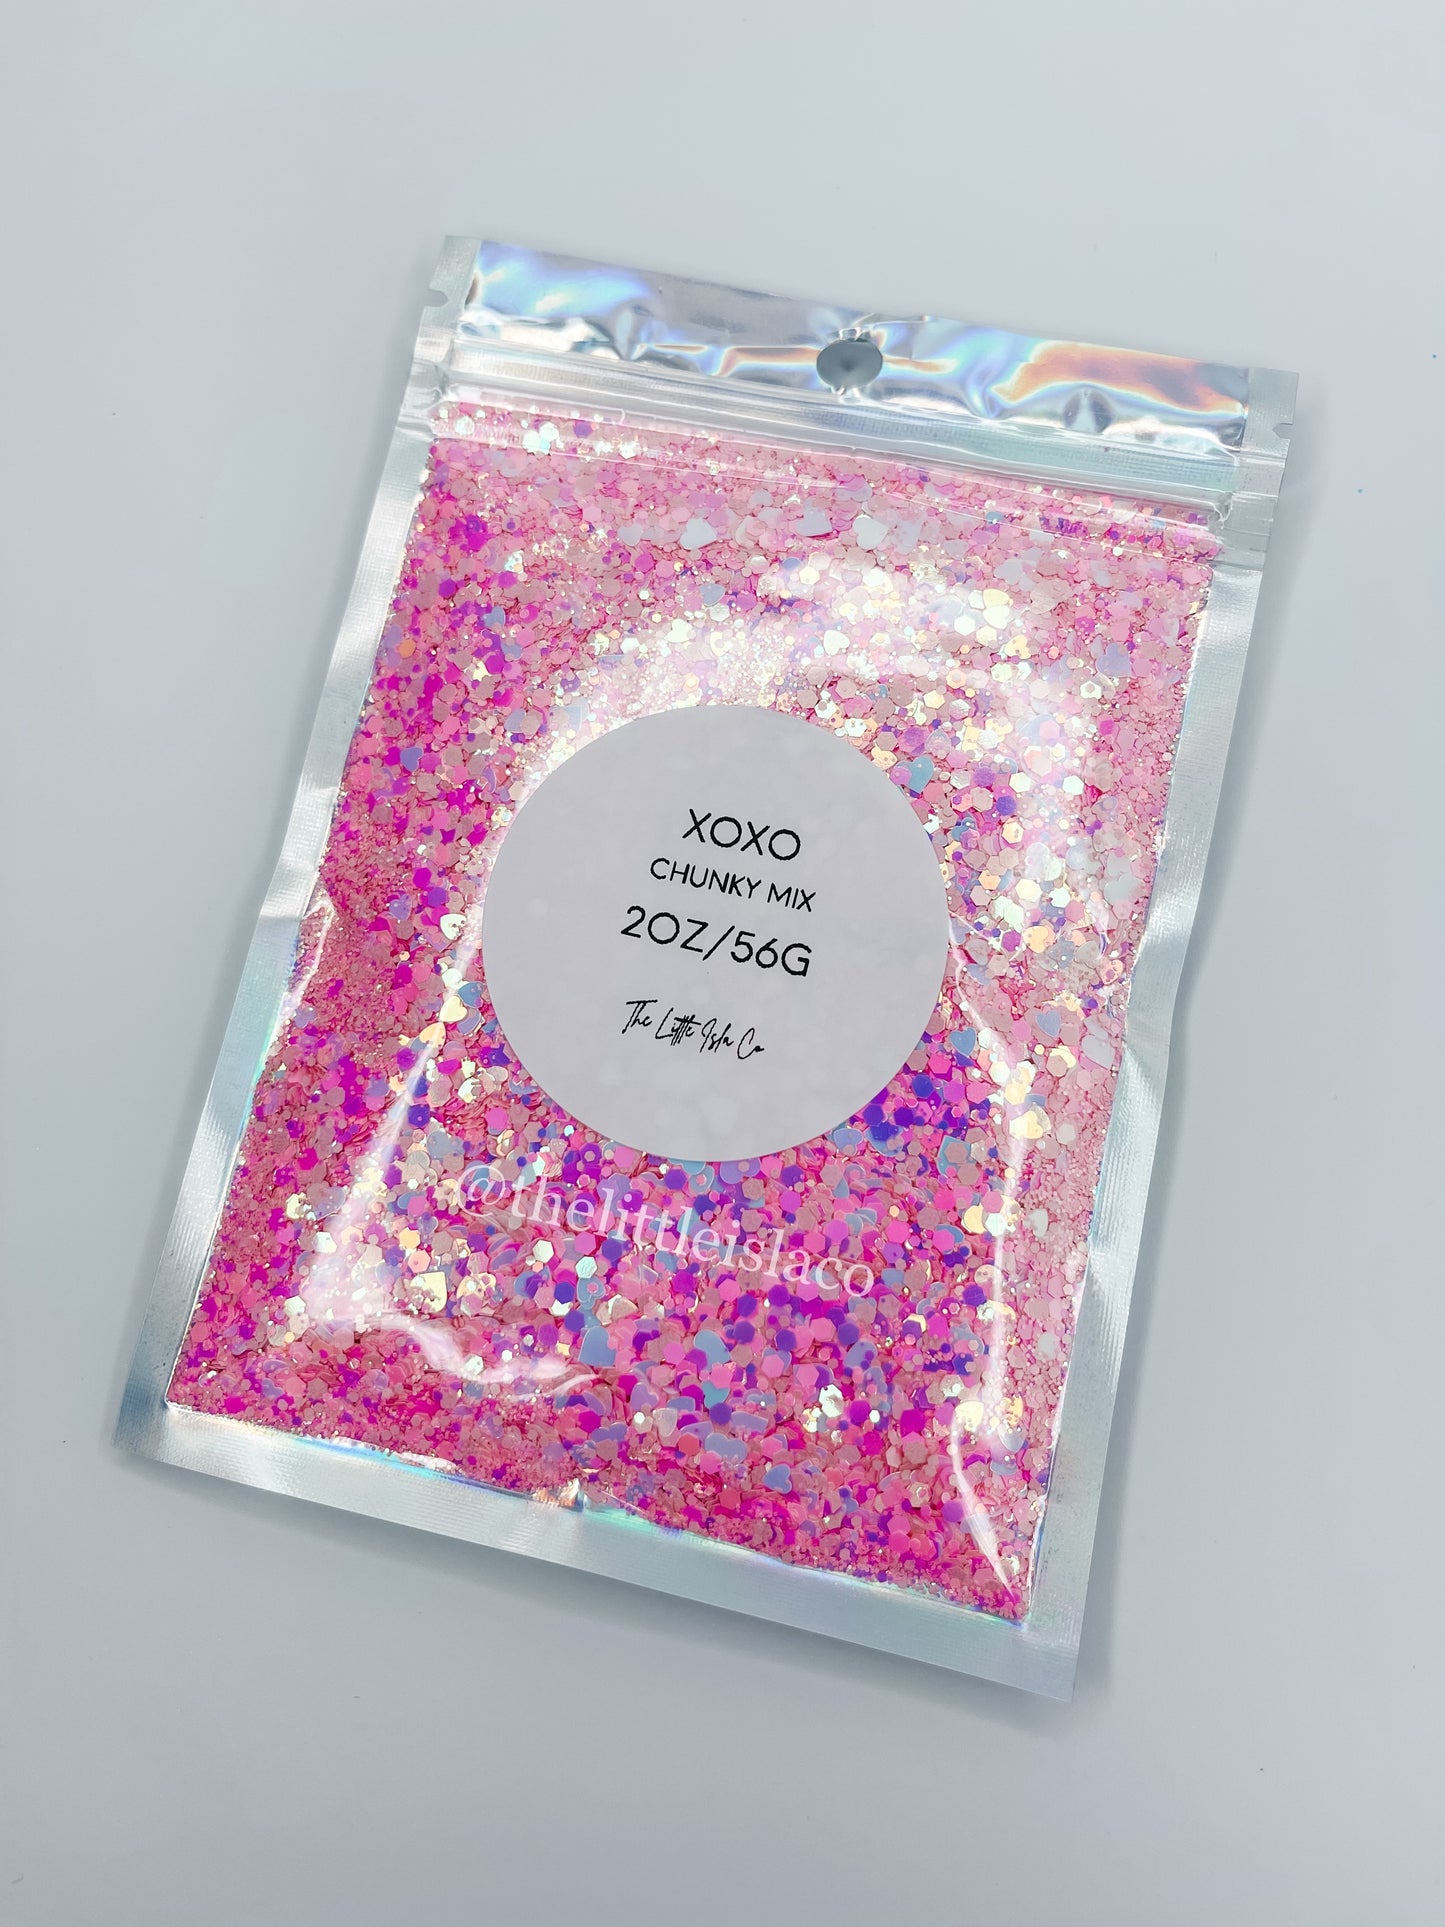 Chunky Glitter Mix - ‘Xoxo’ - 2oz/56g Pack